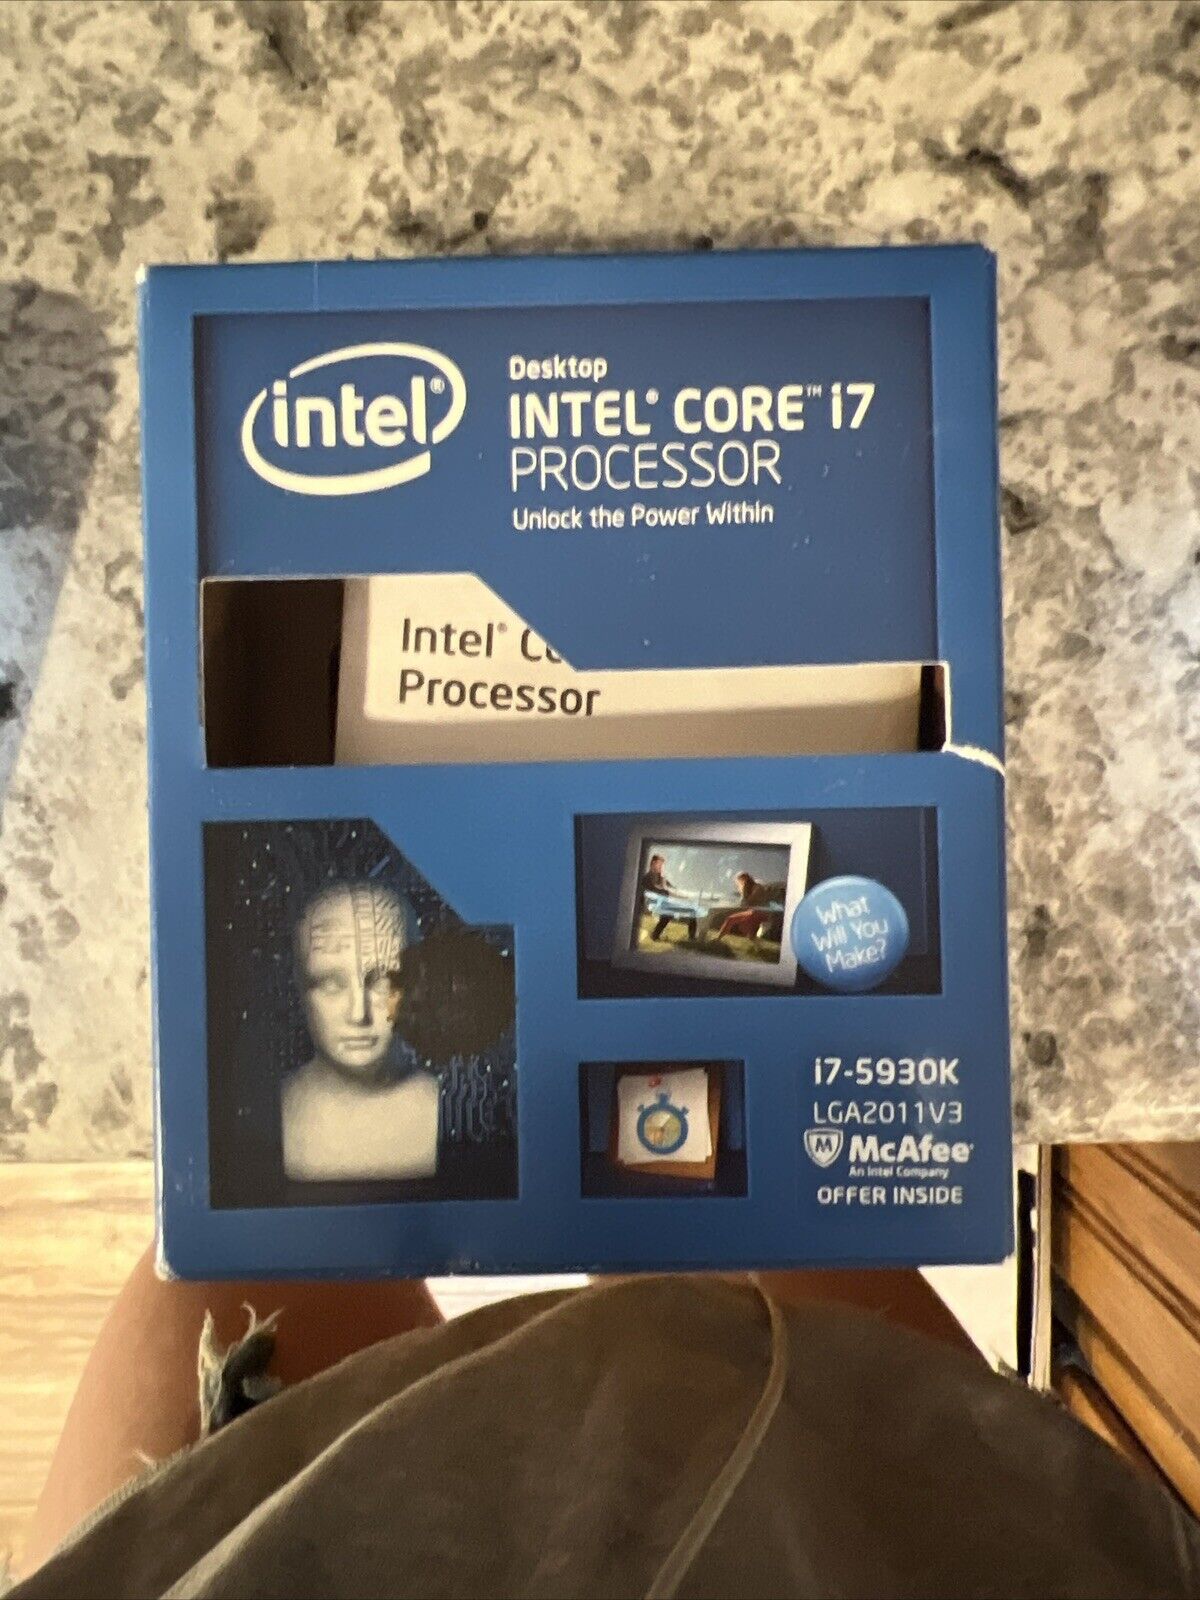 Intel Core i7-5930K 3.5GHz 15MB Cache Processor (BX80648I75930K) New